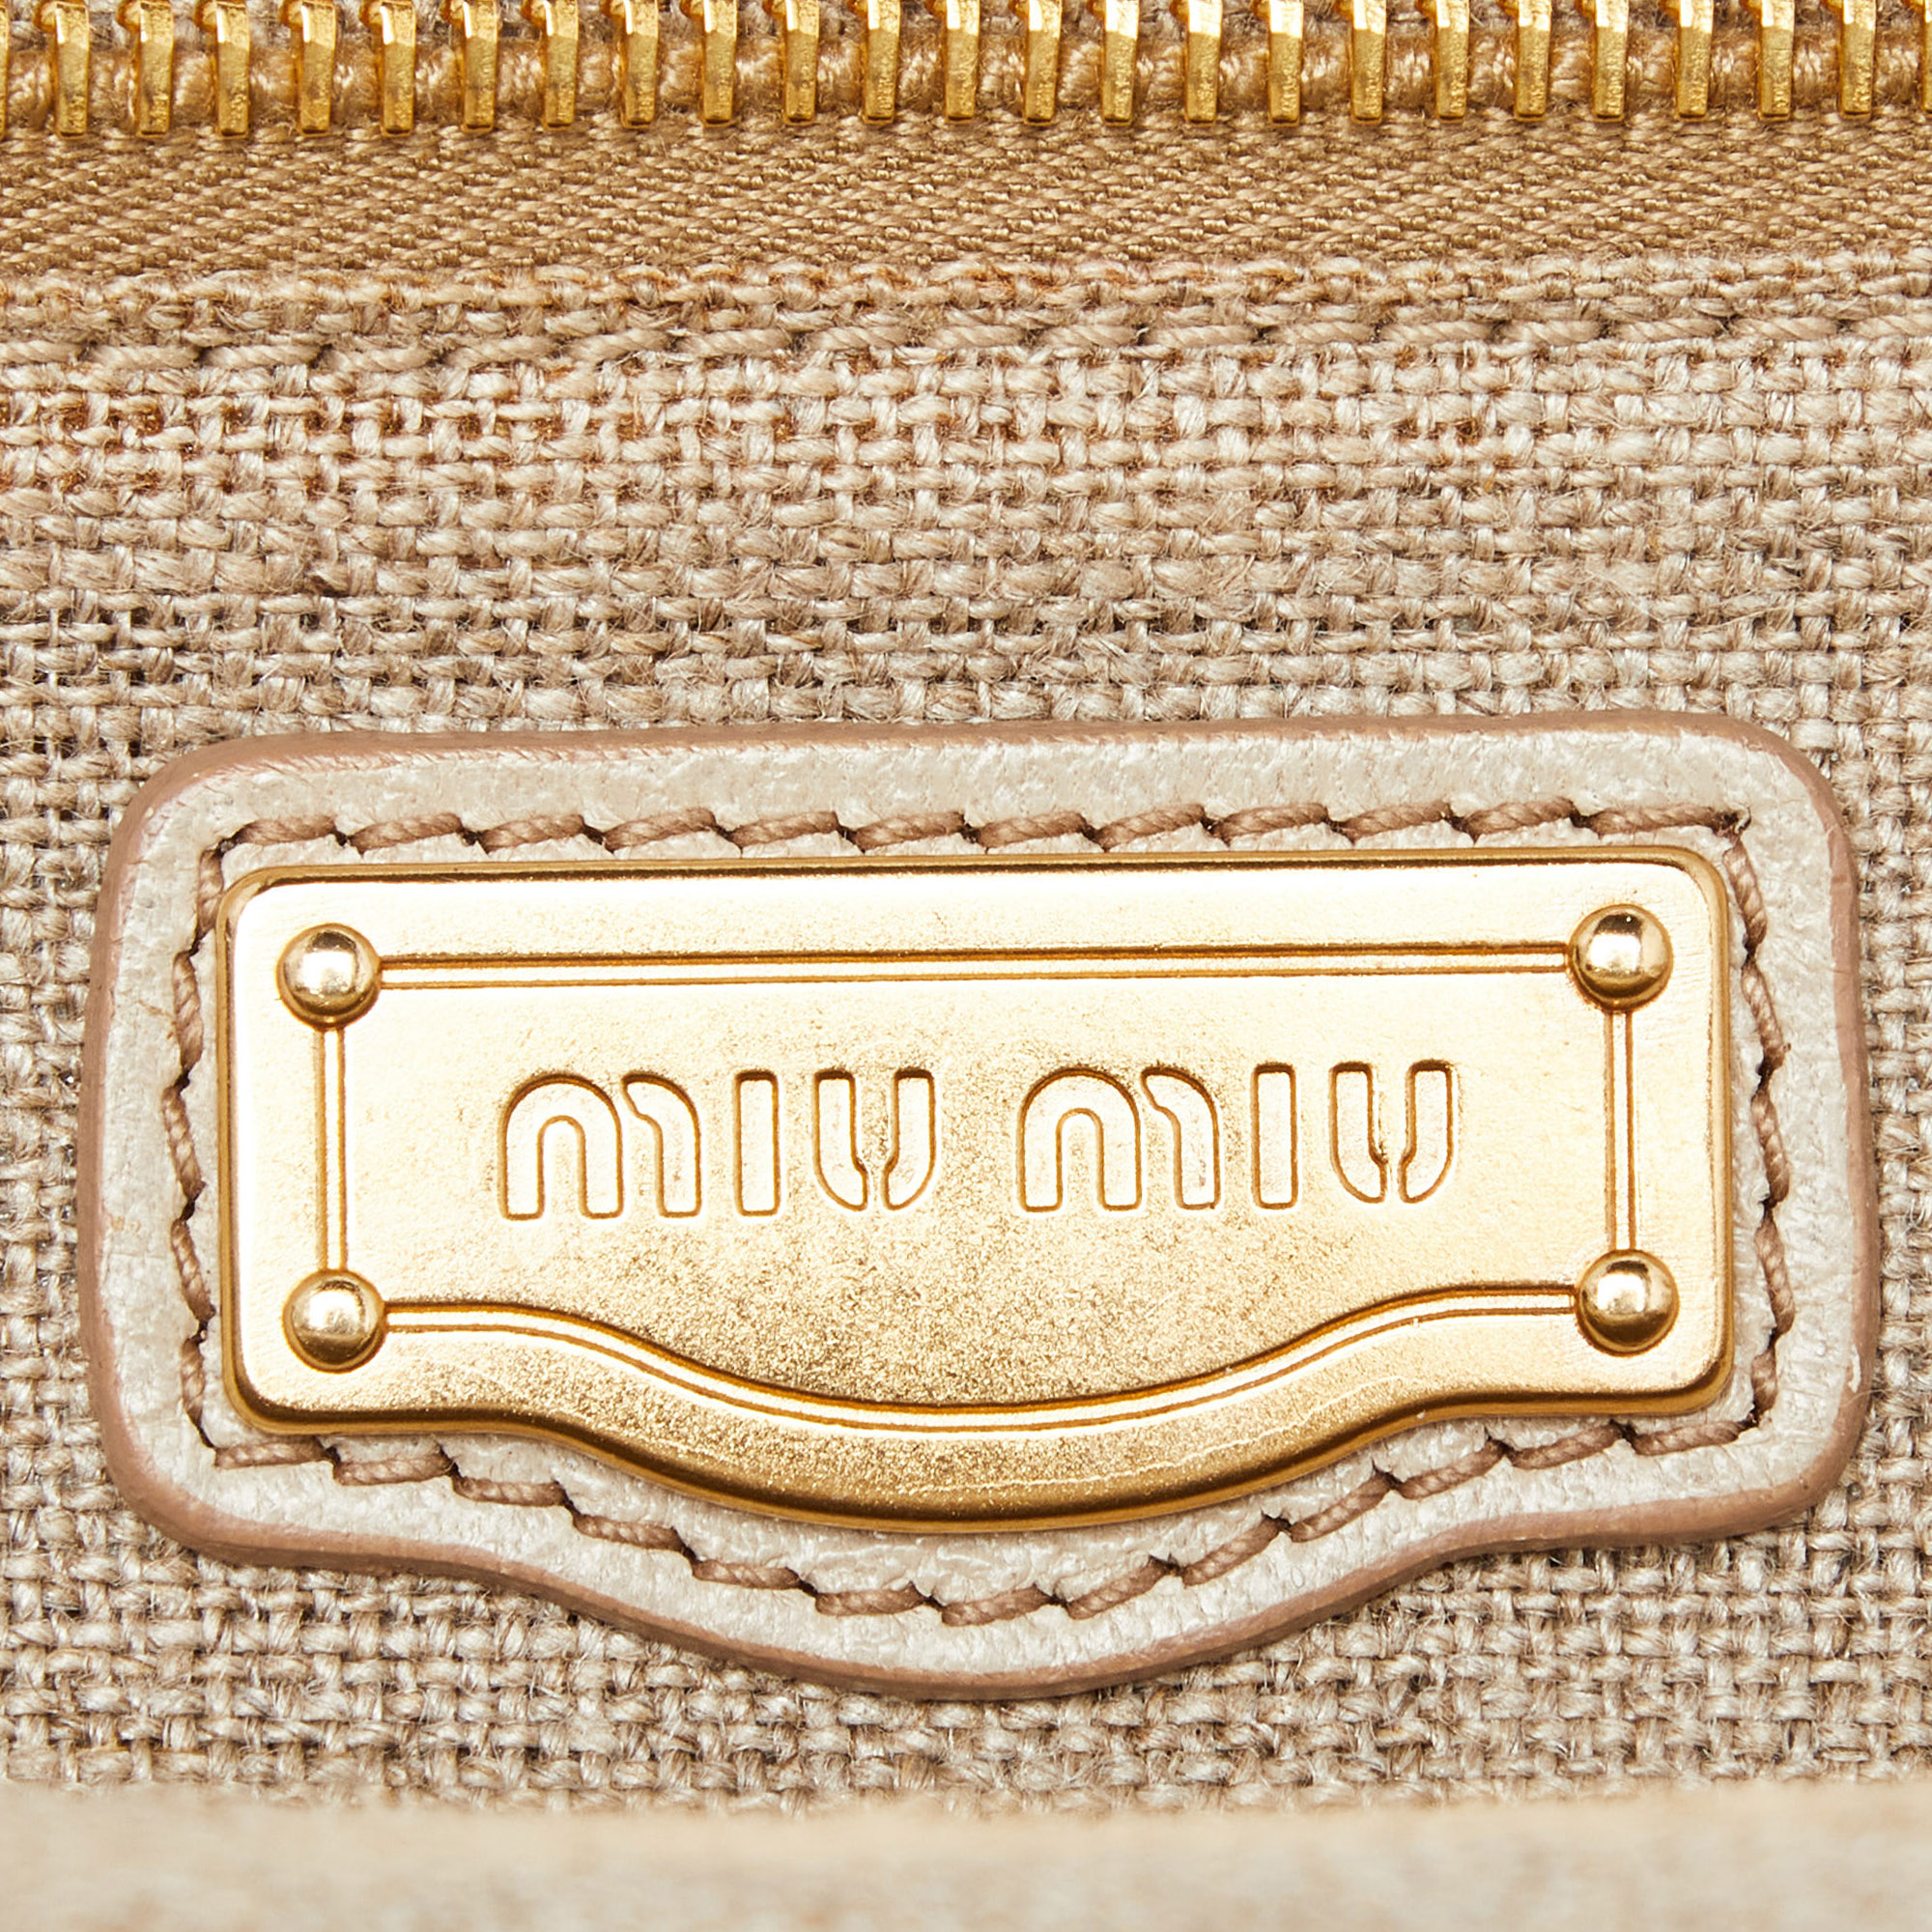 Miu Miu Beige Leather Frame Satchel